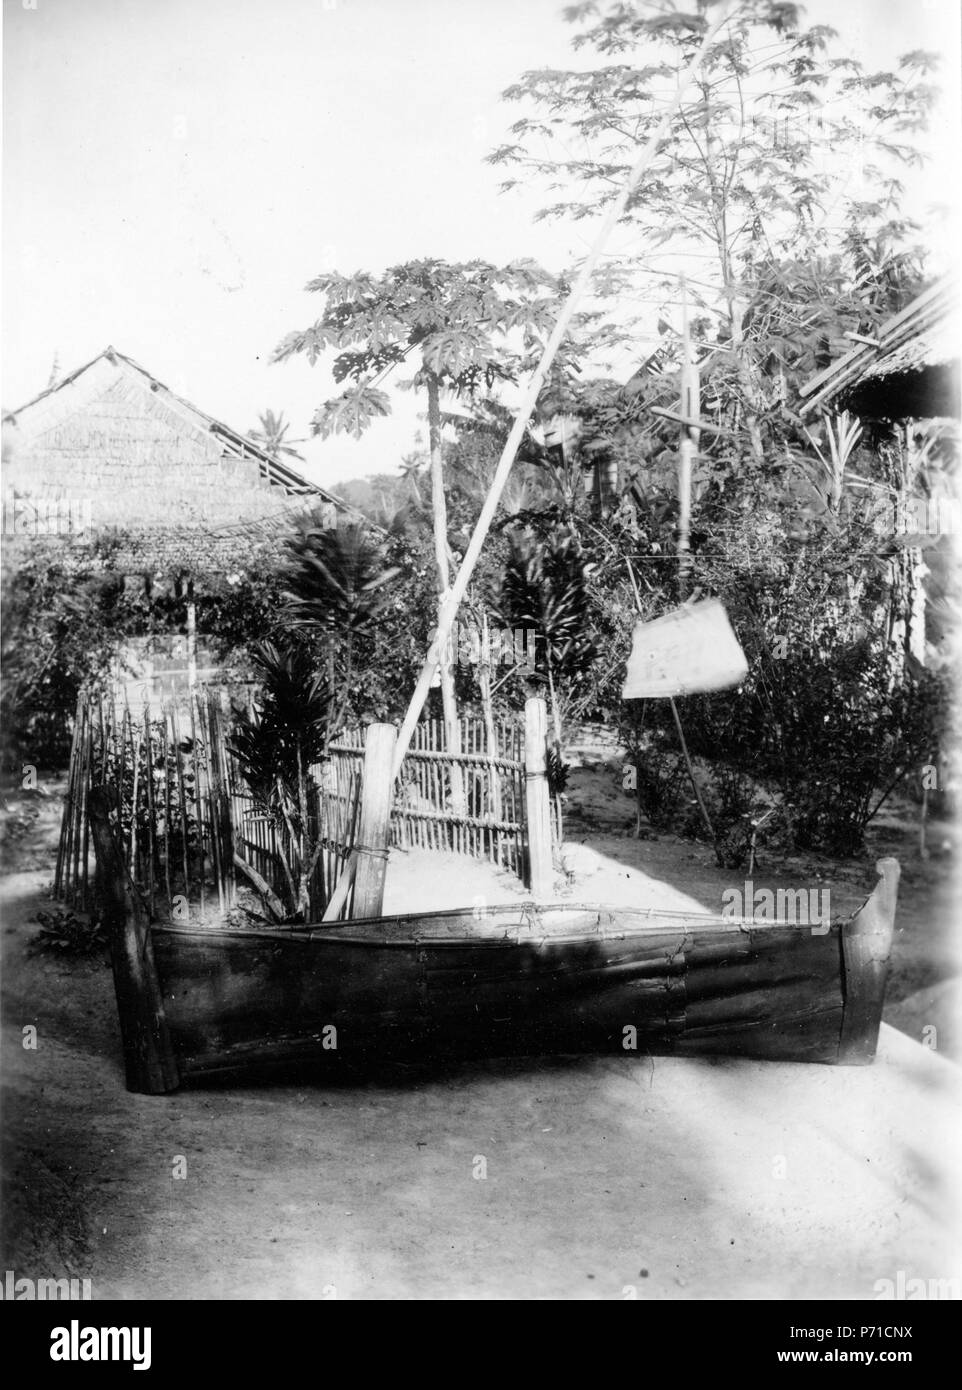 7 Båt använd vid risfesten momosoei. Sulawesi. Indonesien - SMVK - 010876 Stock Photo